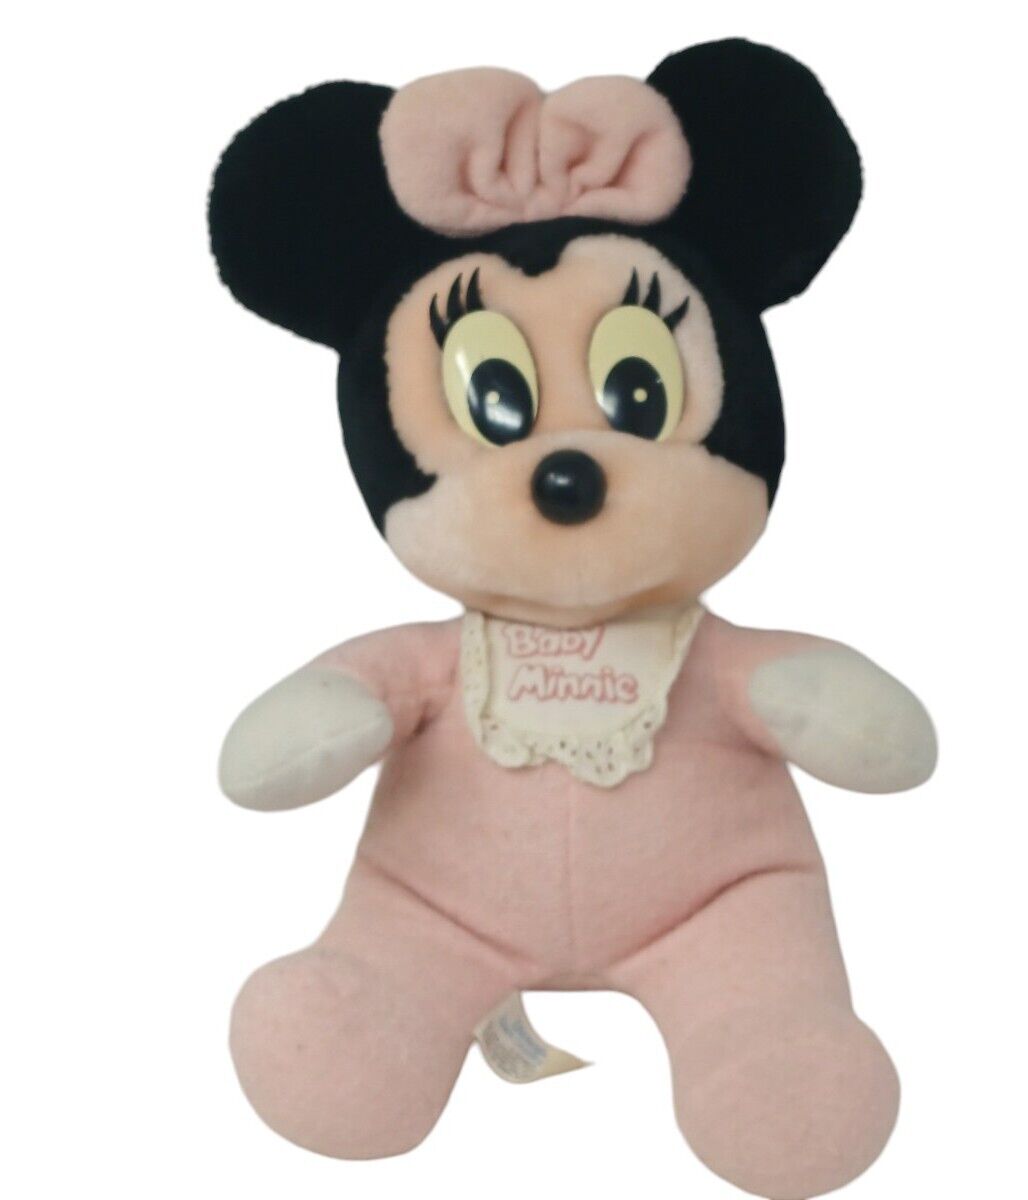 Vintage Minnie Mouse Stuffed Plush Baby Rare 1980\'s Disney World Stuffed